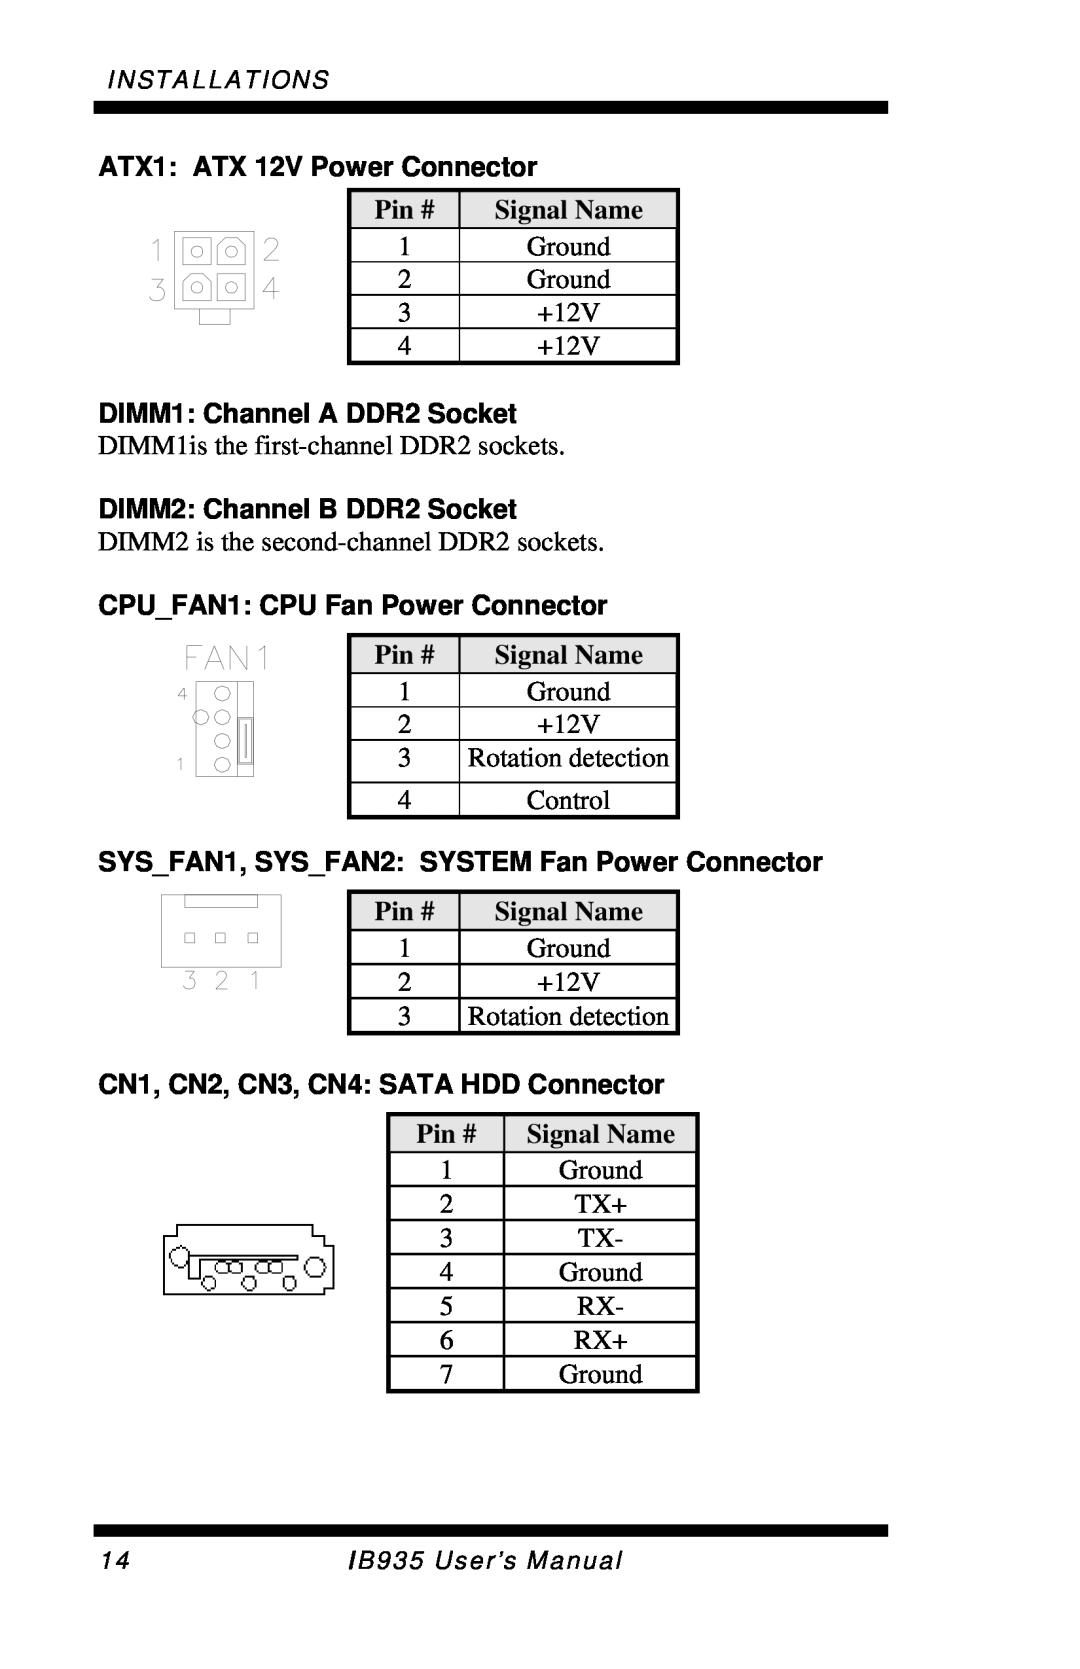 Intel IB935 user manual ATX1 ATX 12V Power Connector, DIMM2 Channel B DDR2 Socket, CPUFAN1 CPU Fan Power Connector 